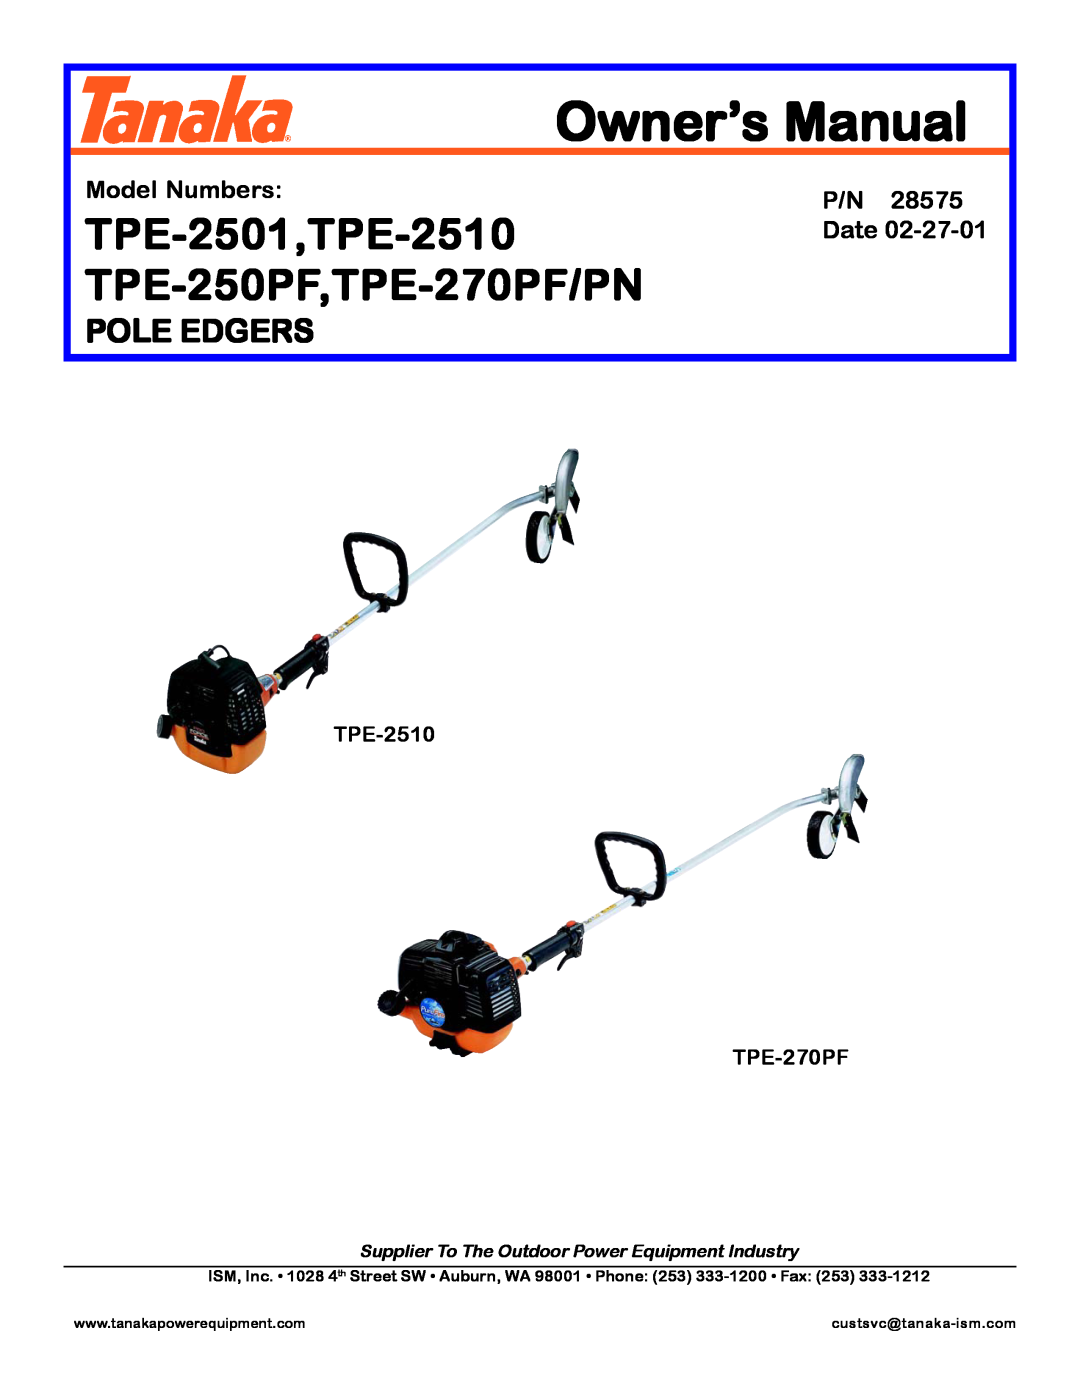 Tanaka TPE-25OPF manual Pole Edgers, Owner’s Manual, TPE-2501,TPE-2510, TPE-250PF,TPE-270PF/PN, Model Numbers, Date 